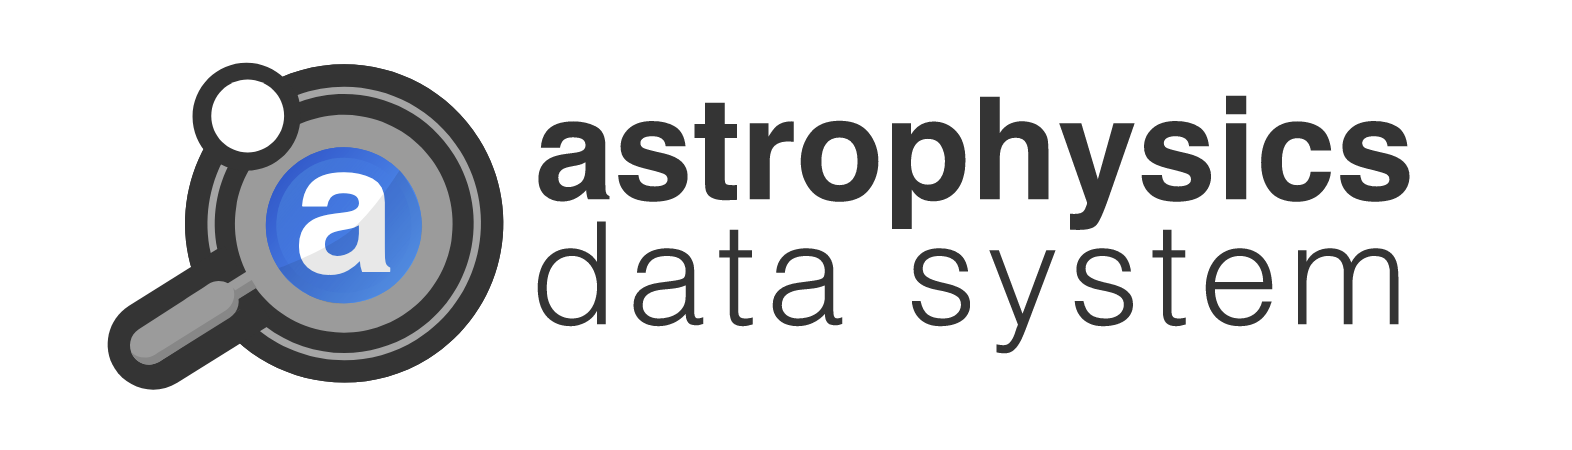 Astrophysics Data System (ADS) logo